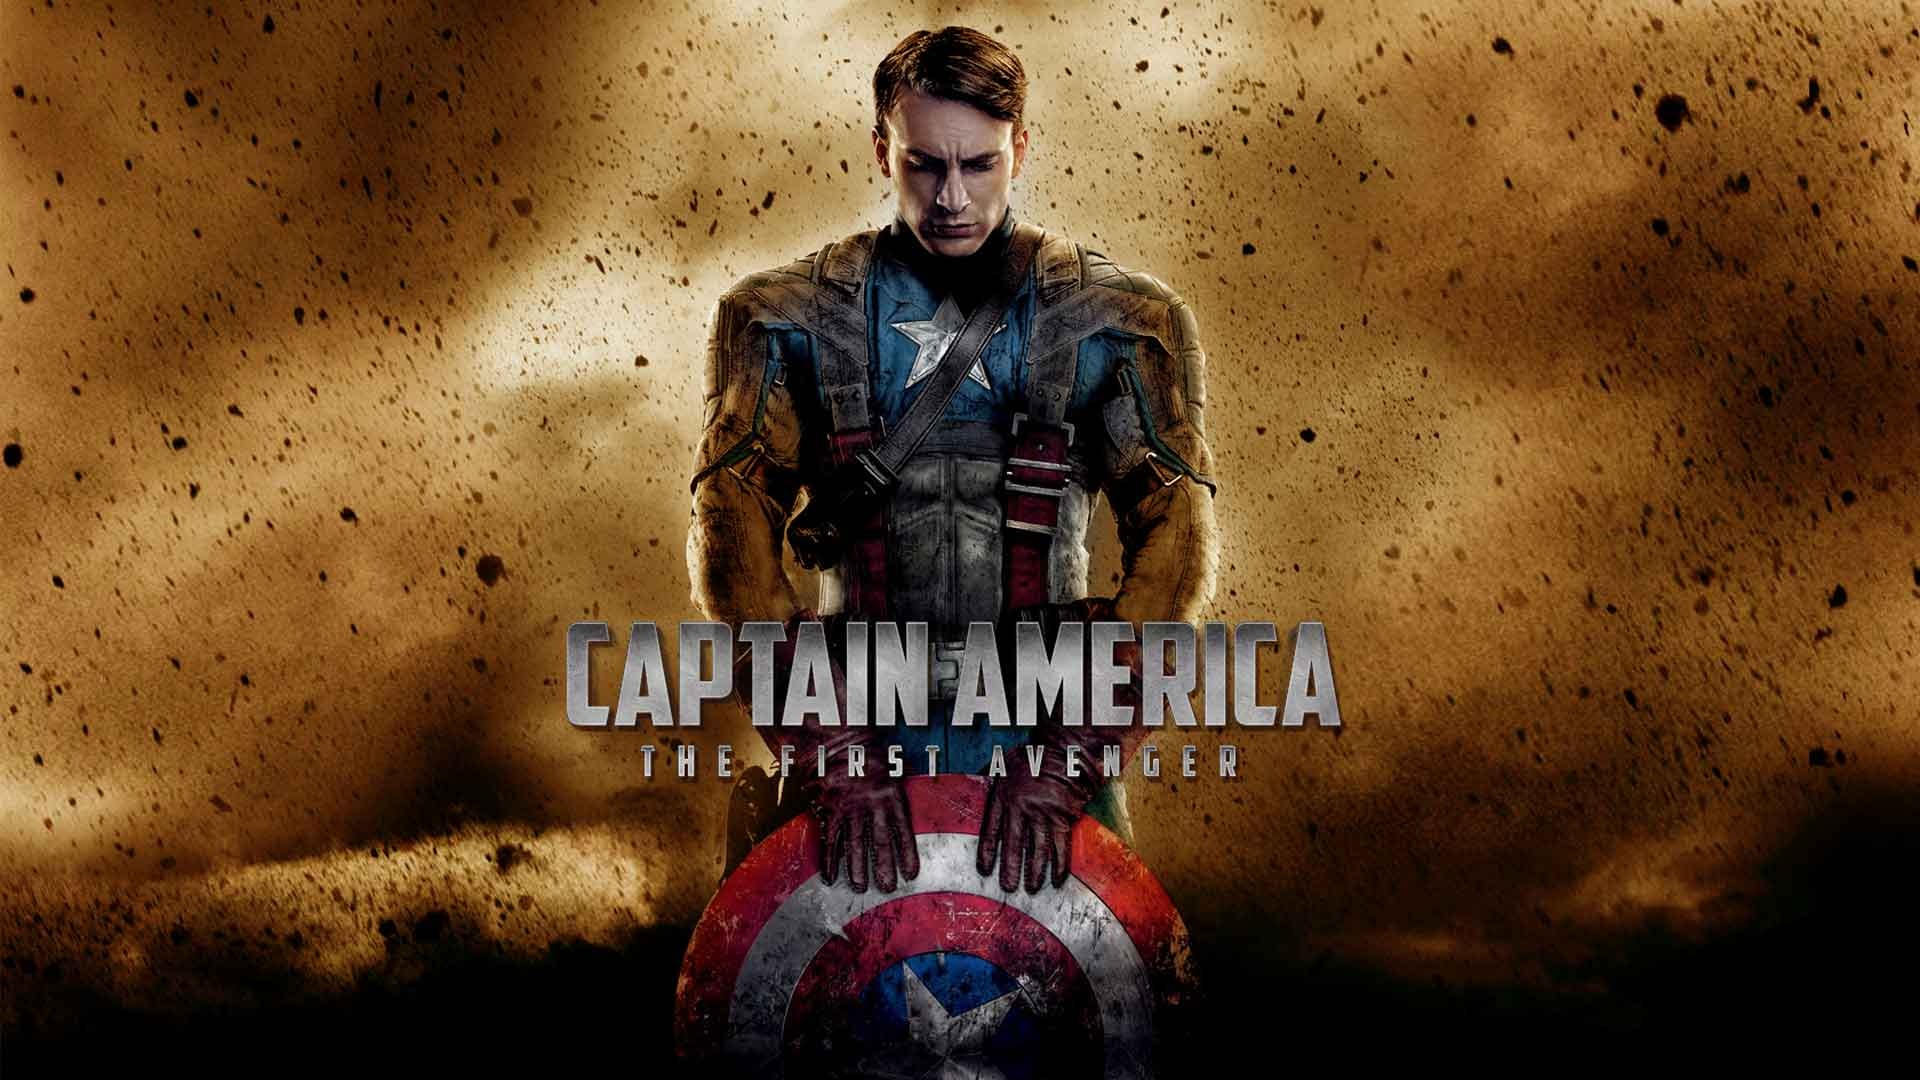 captain america first avenger download